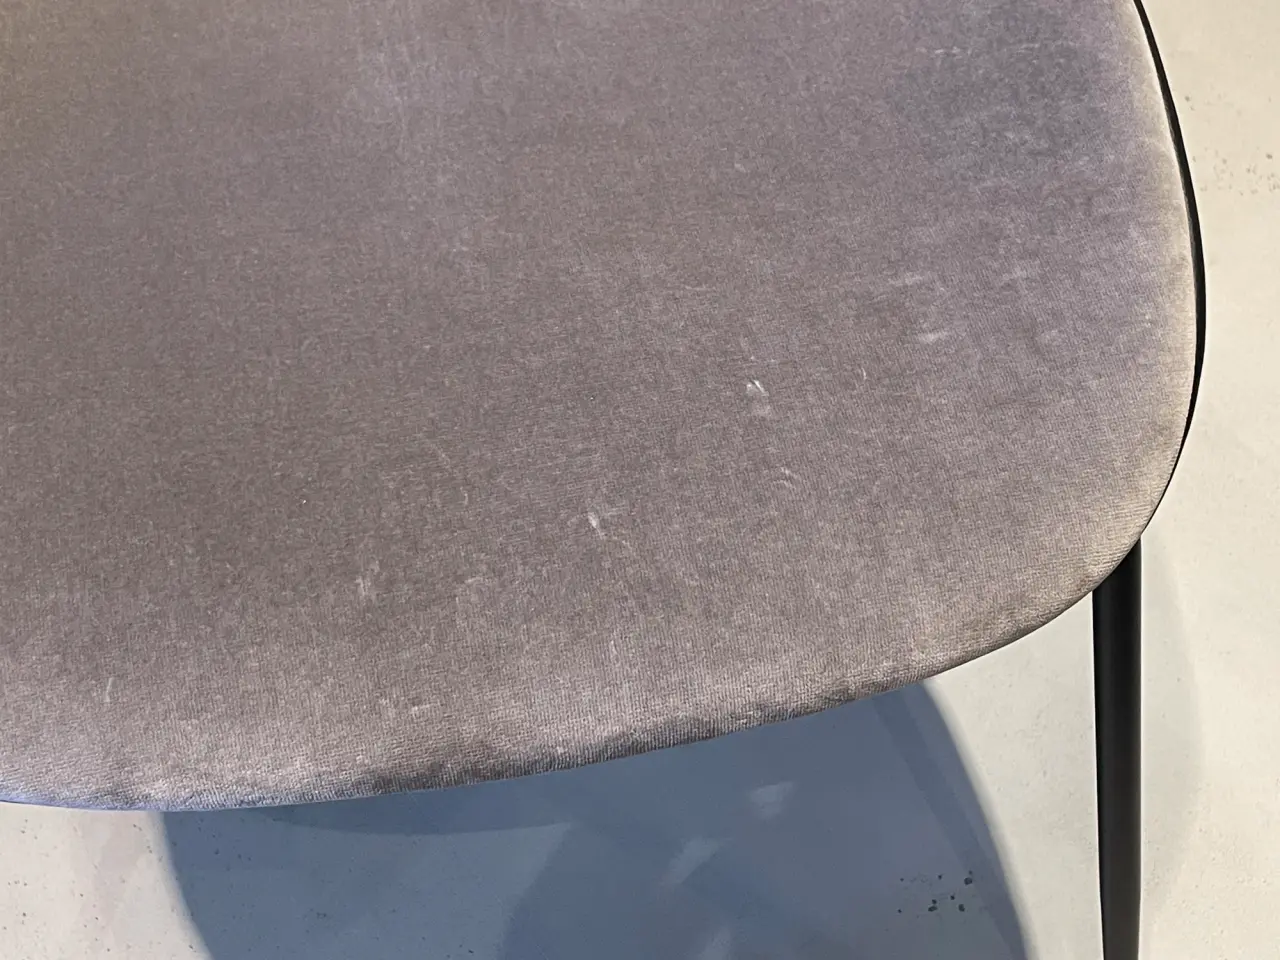 Beetle Dining Chair Stuhl Velvet Leder Pigeon Grey